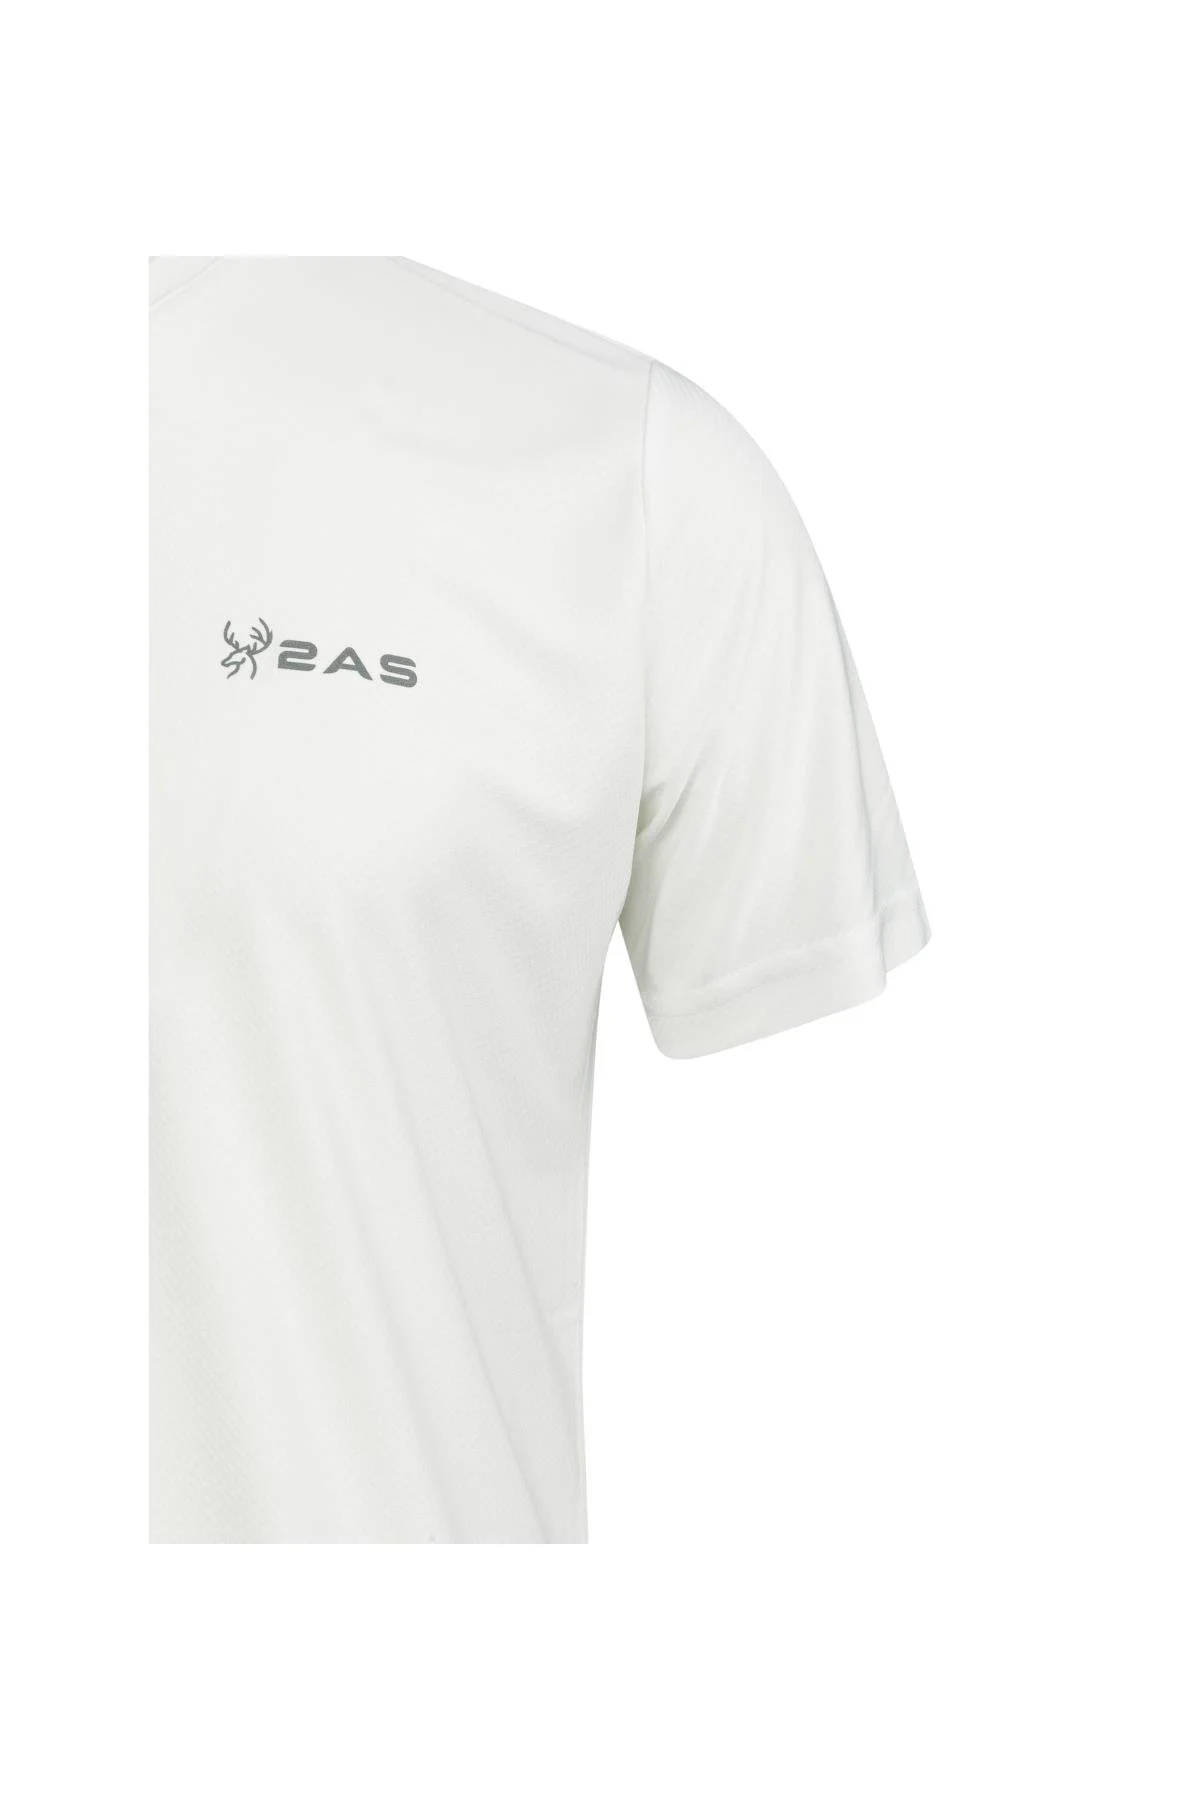 2AS Elba V Yaka T-shirt Beyaz - 2